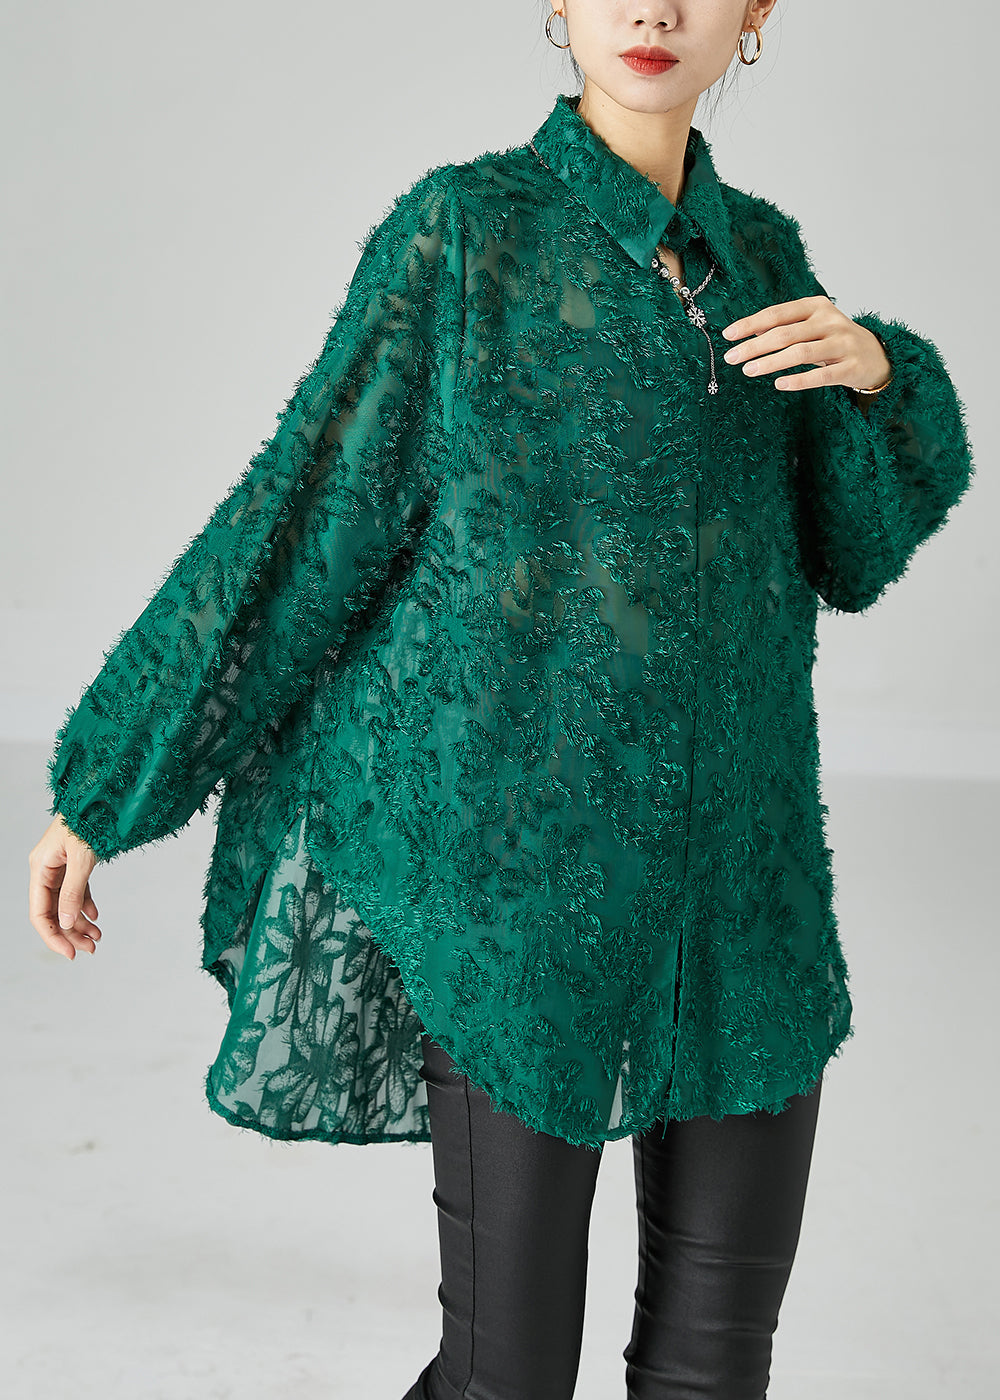 Blackish Green Loose Lace UPF 50+ Shirt Tops Fluffy Summer LY2460